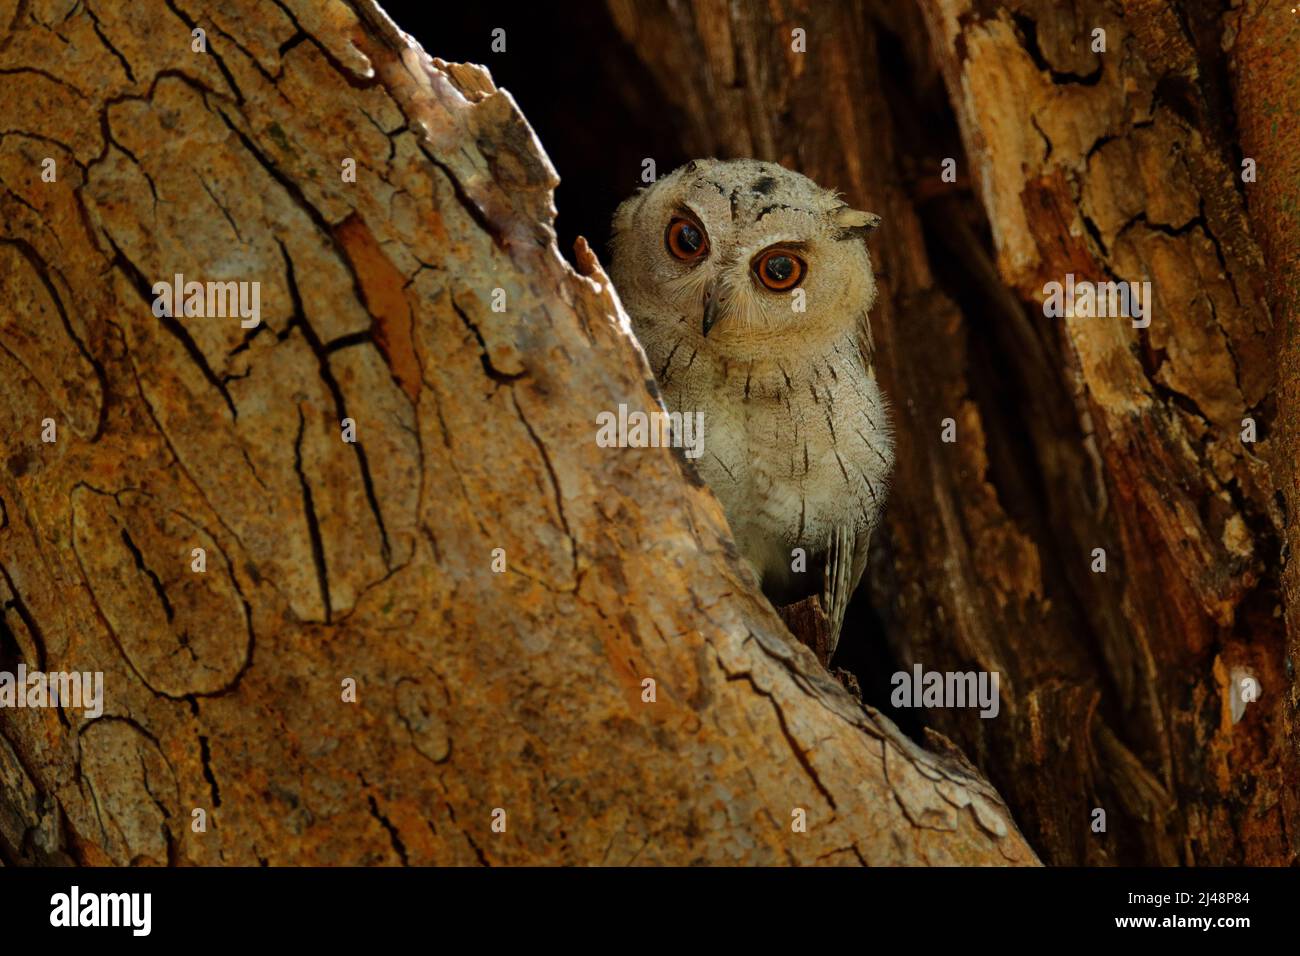 Indian scops owl, Otus bakkamoena, rare bird from Asia. Malaysia beautiful owl in the nature forest habitat. Bird from India. Fish owl sitting on tree Stock Photo